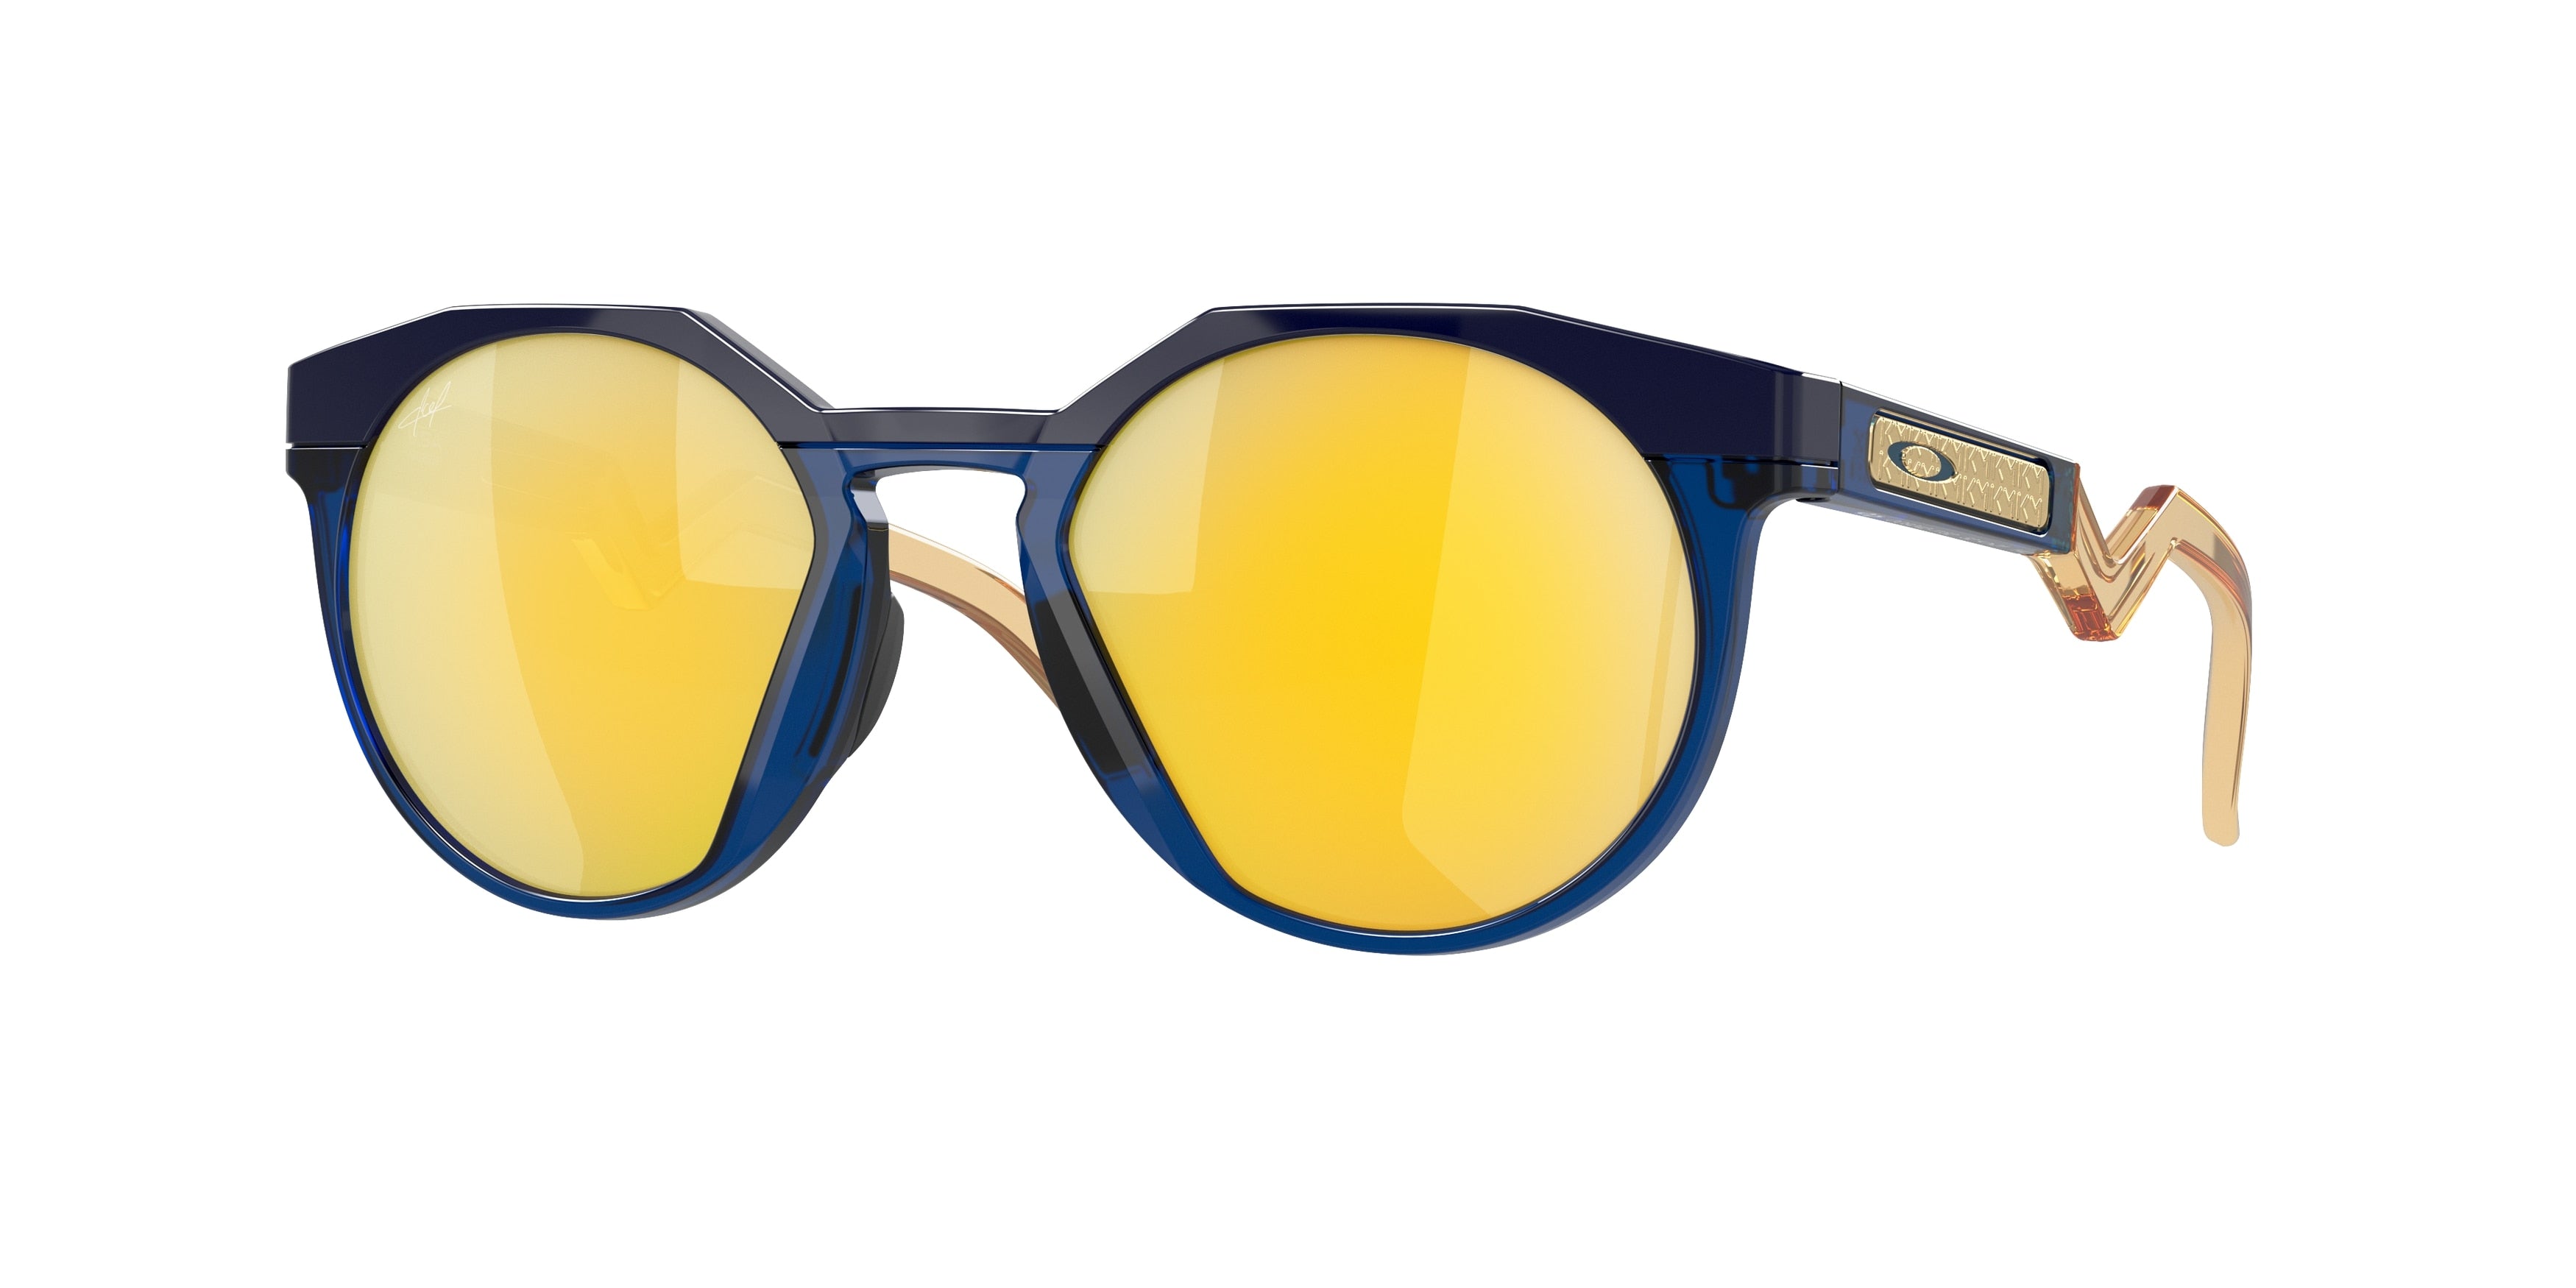 Yellow/blue sunglasses